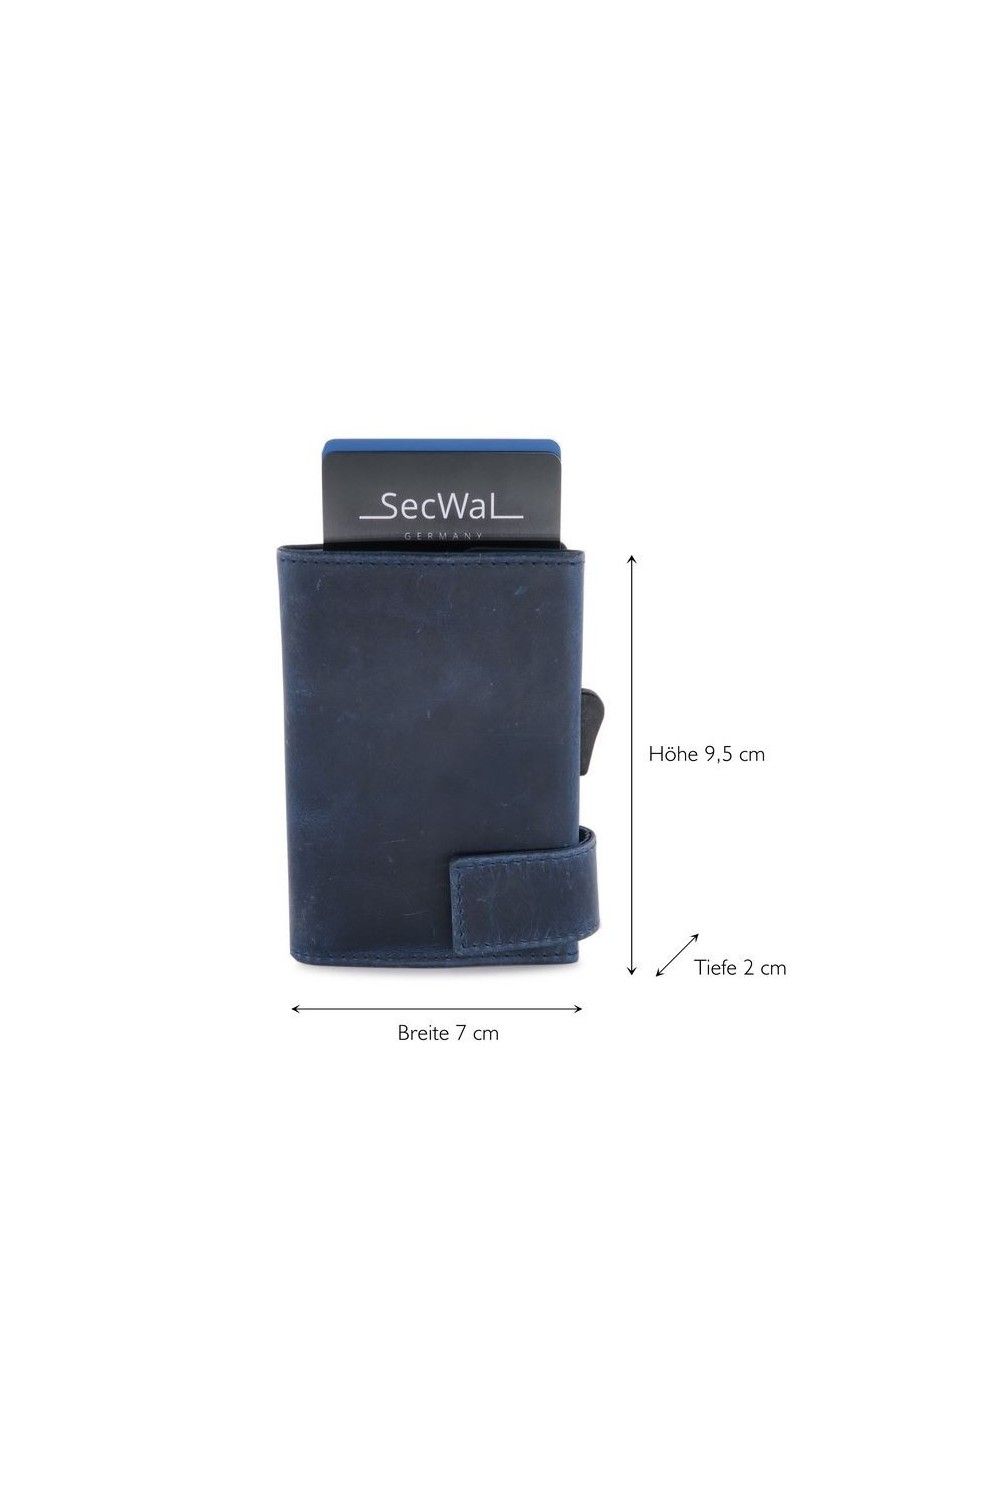 Porte-cartes SecWal DK Leather Hunter Beu